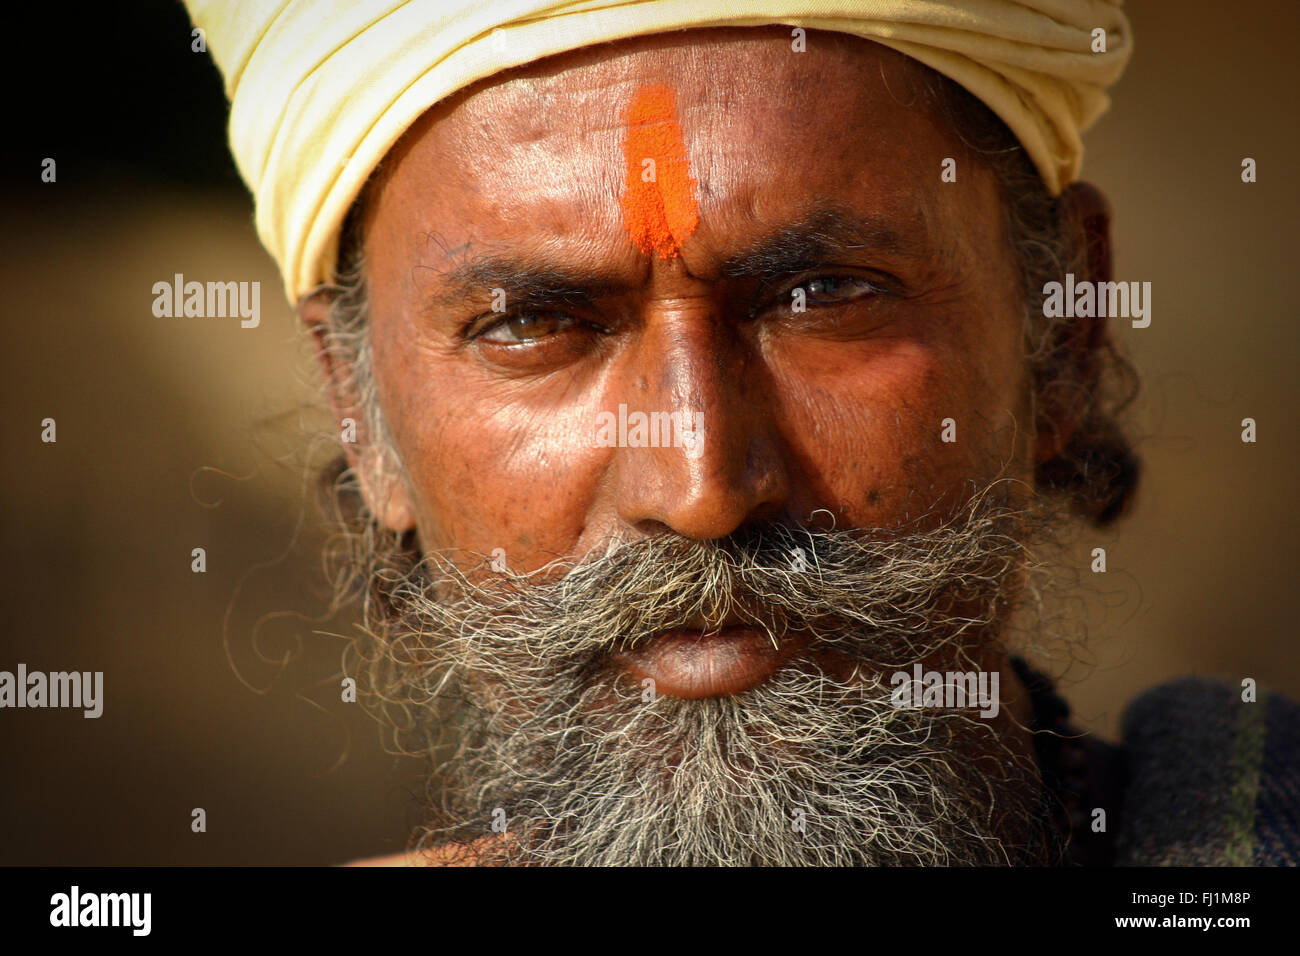 Sadhu indù uomo santo in Jaisalmer, India Foto Stock